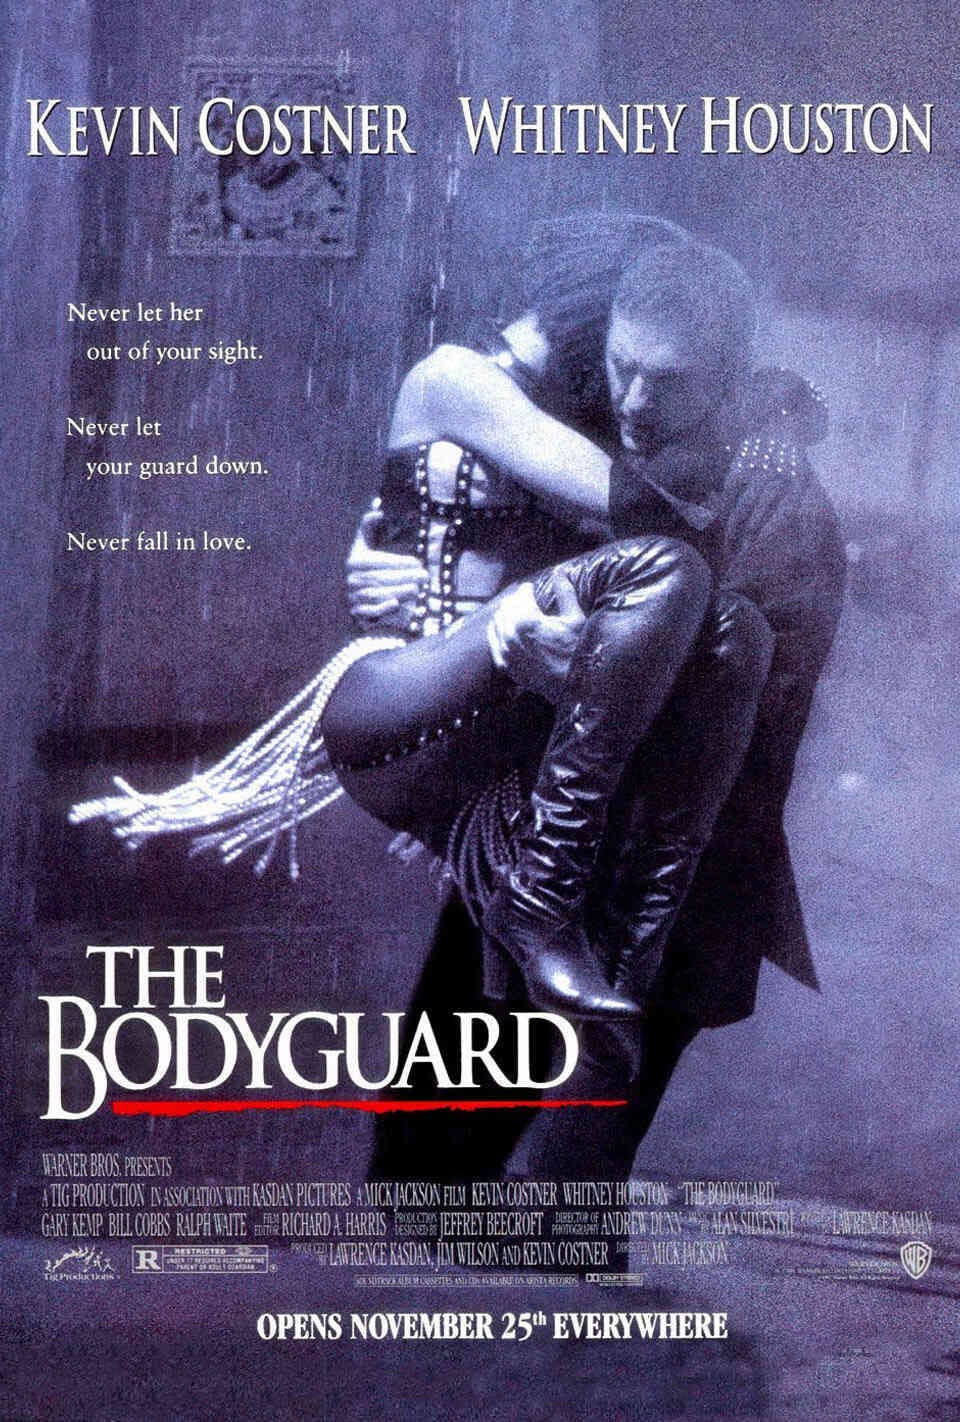 Read The Bodyguard screenplay.